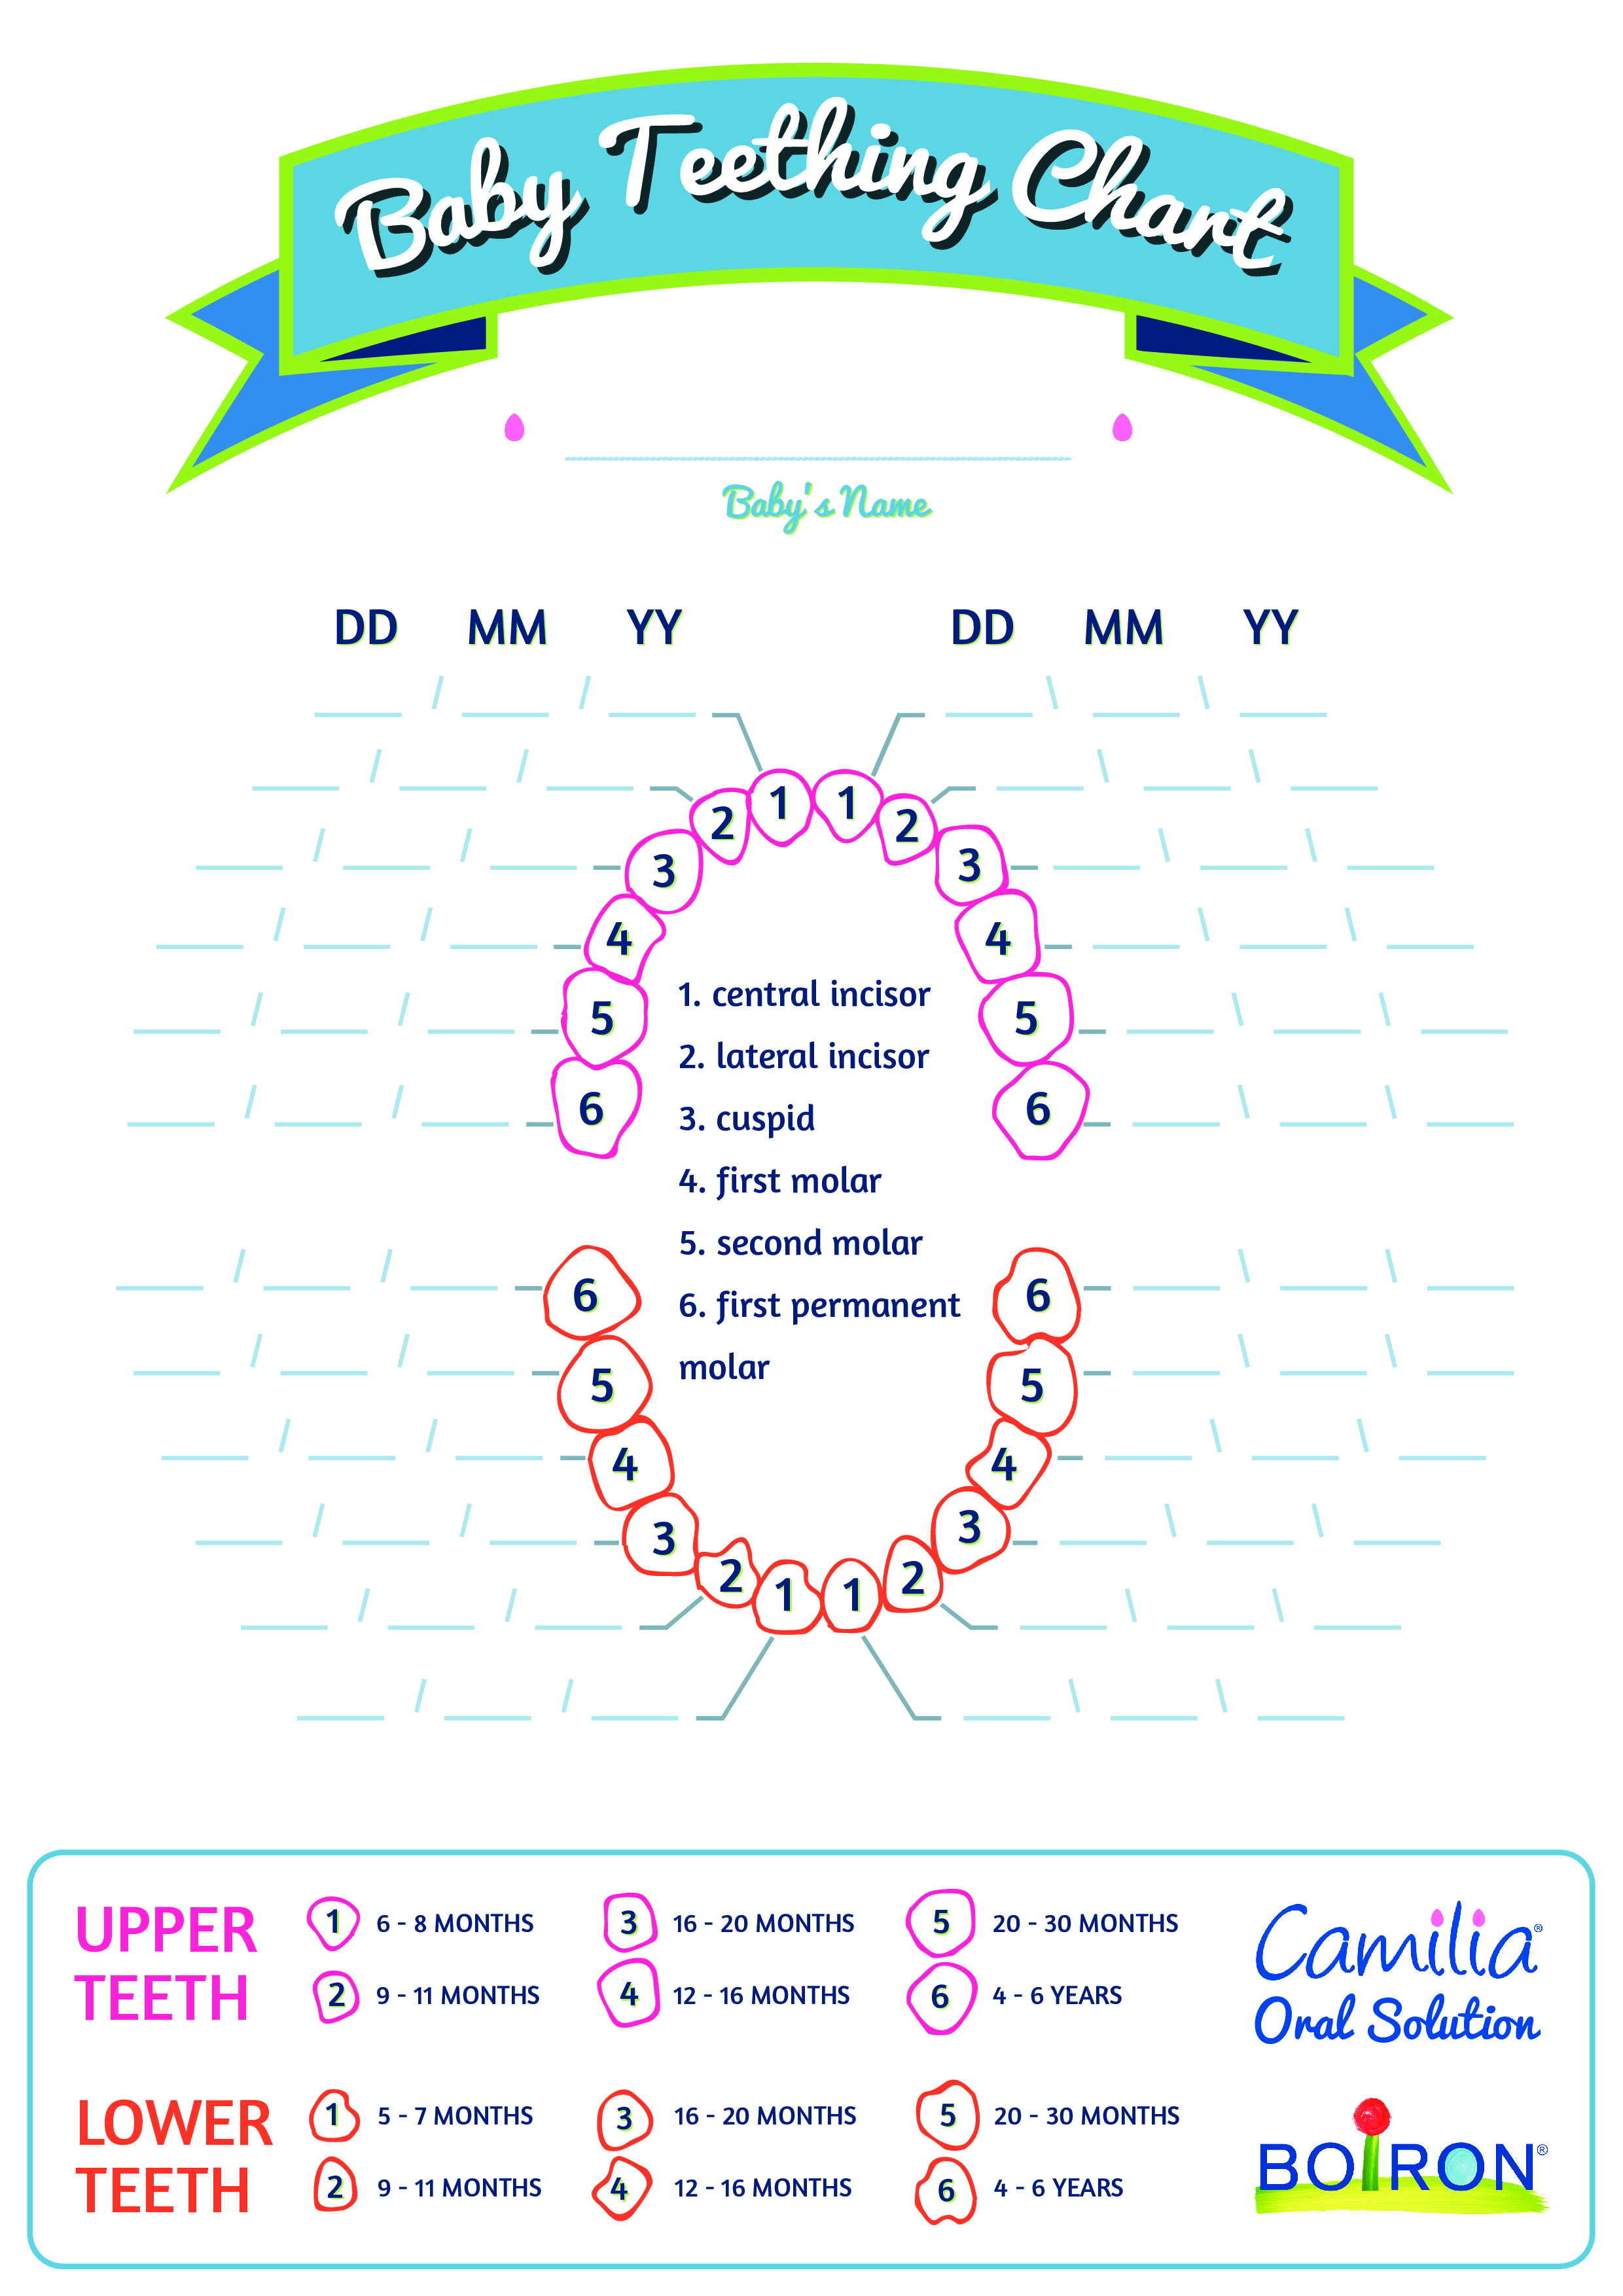 basic-baby-teething-chart-templates-at-allbusinesstemplates